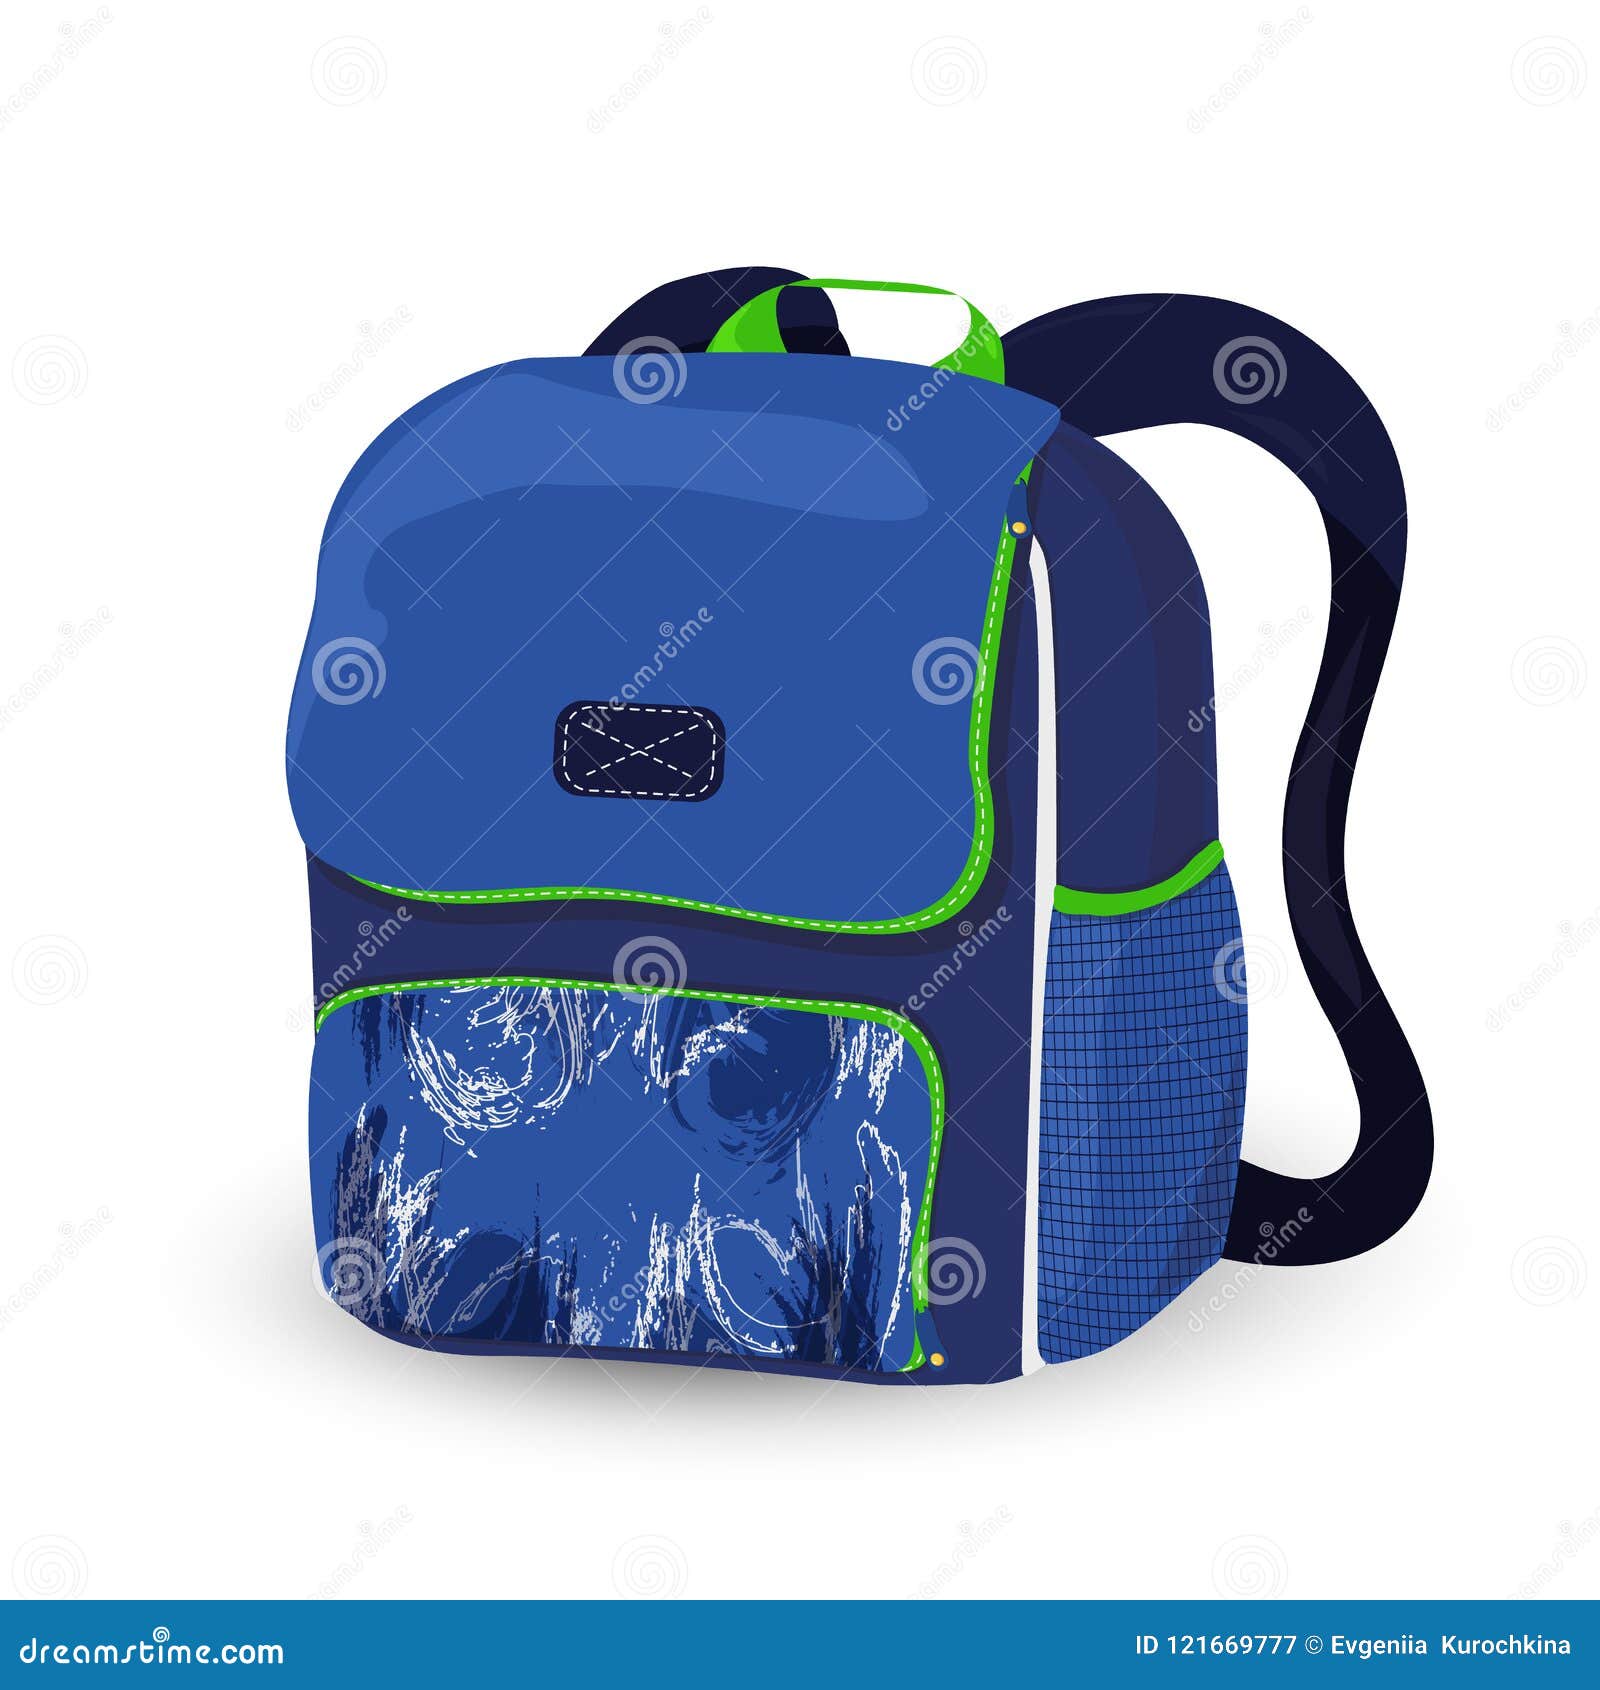 2021 Custom Backpack Bag Graffiti Style Fashion Bags New Design Child School  | eBay